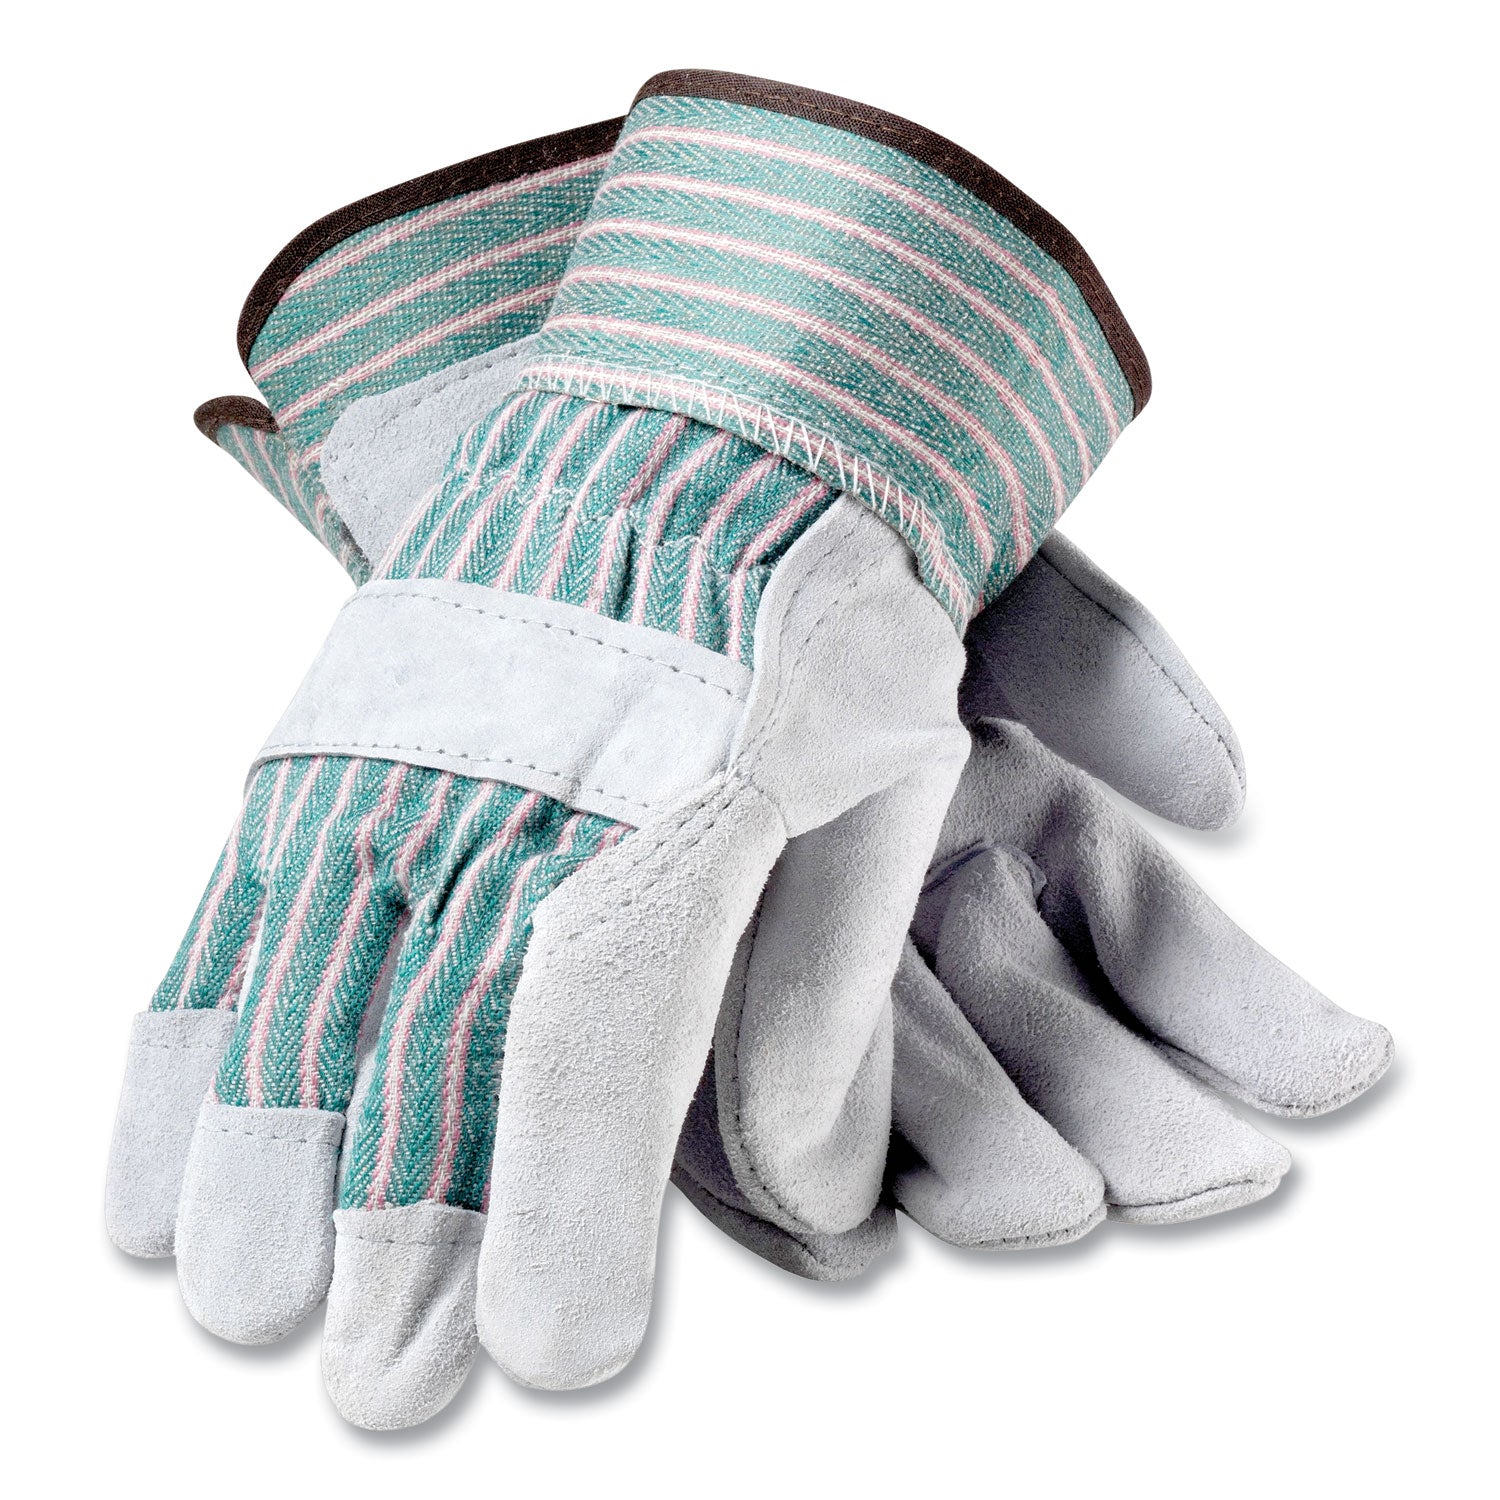 bronze-series-leather-fabric-work-gloves-medium-size-8-gray-green-12-pairs_pid836563m - 1